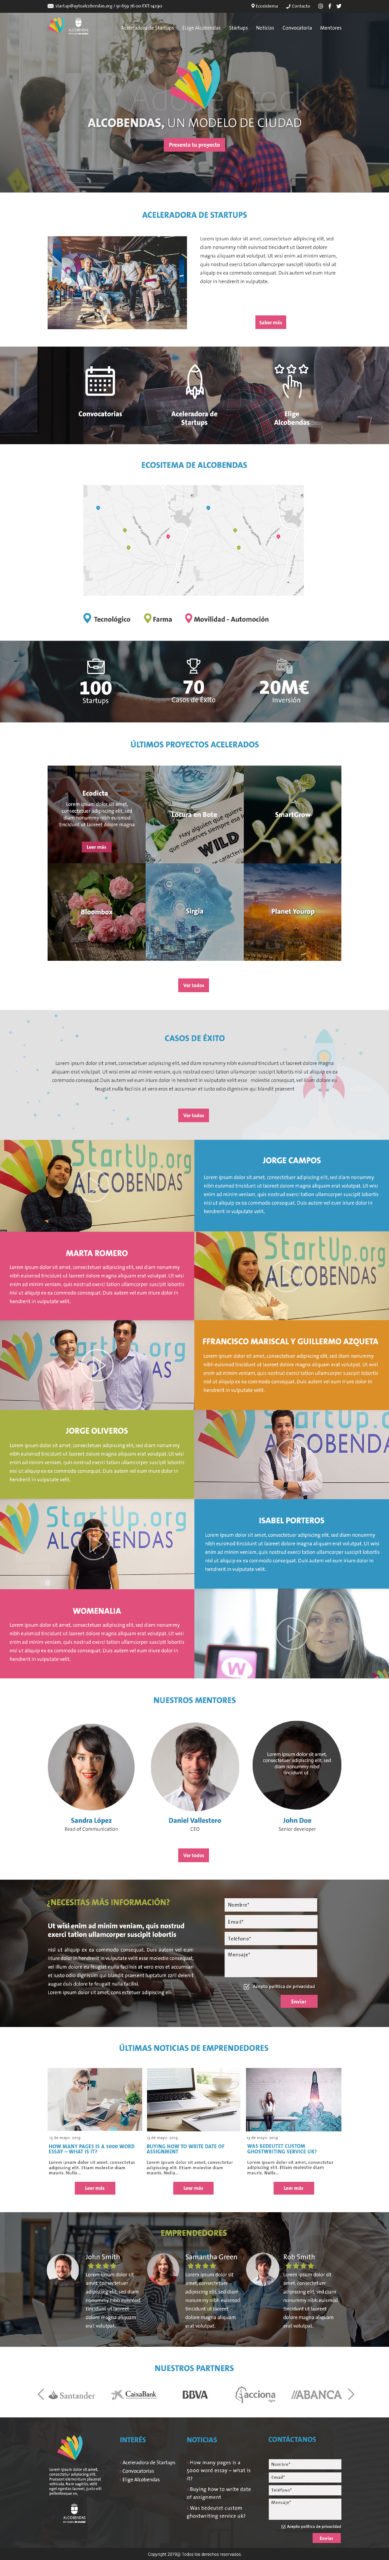 startup_alcobendas_landing